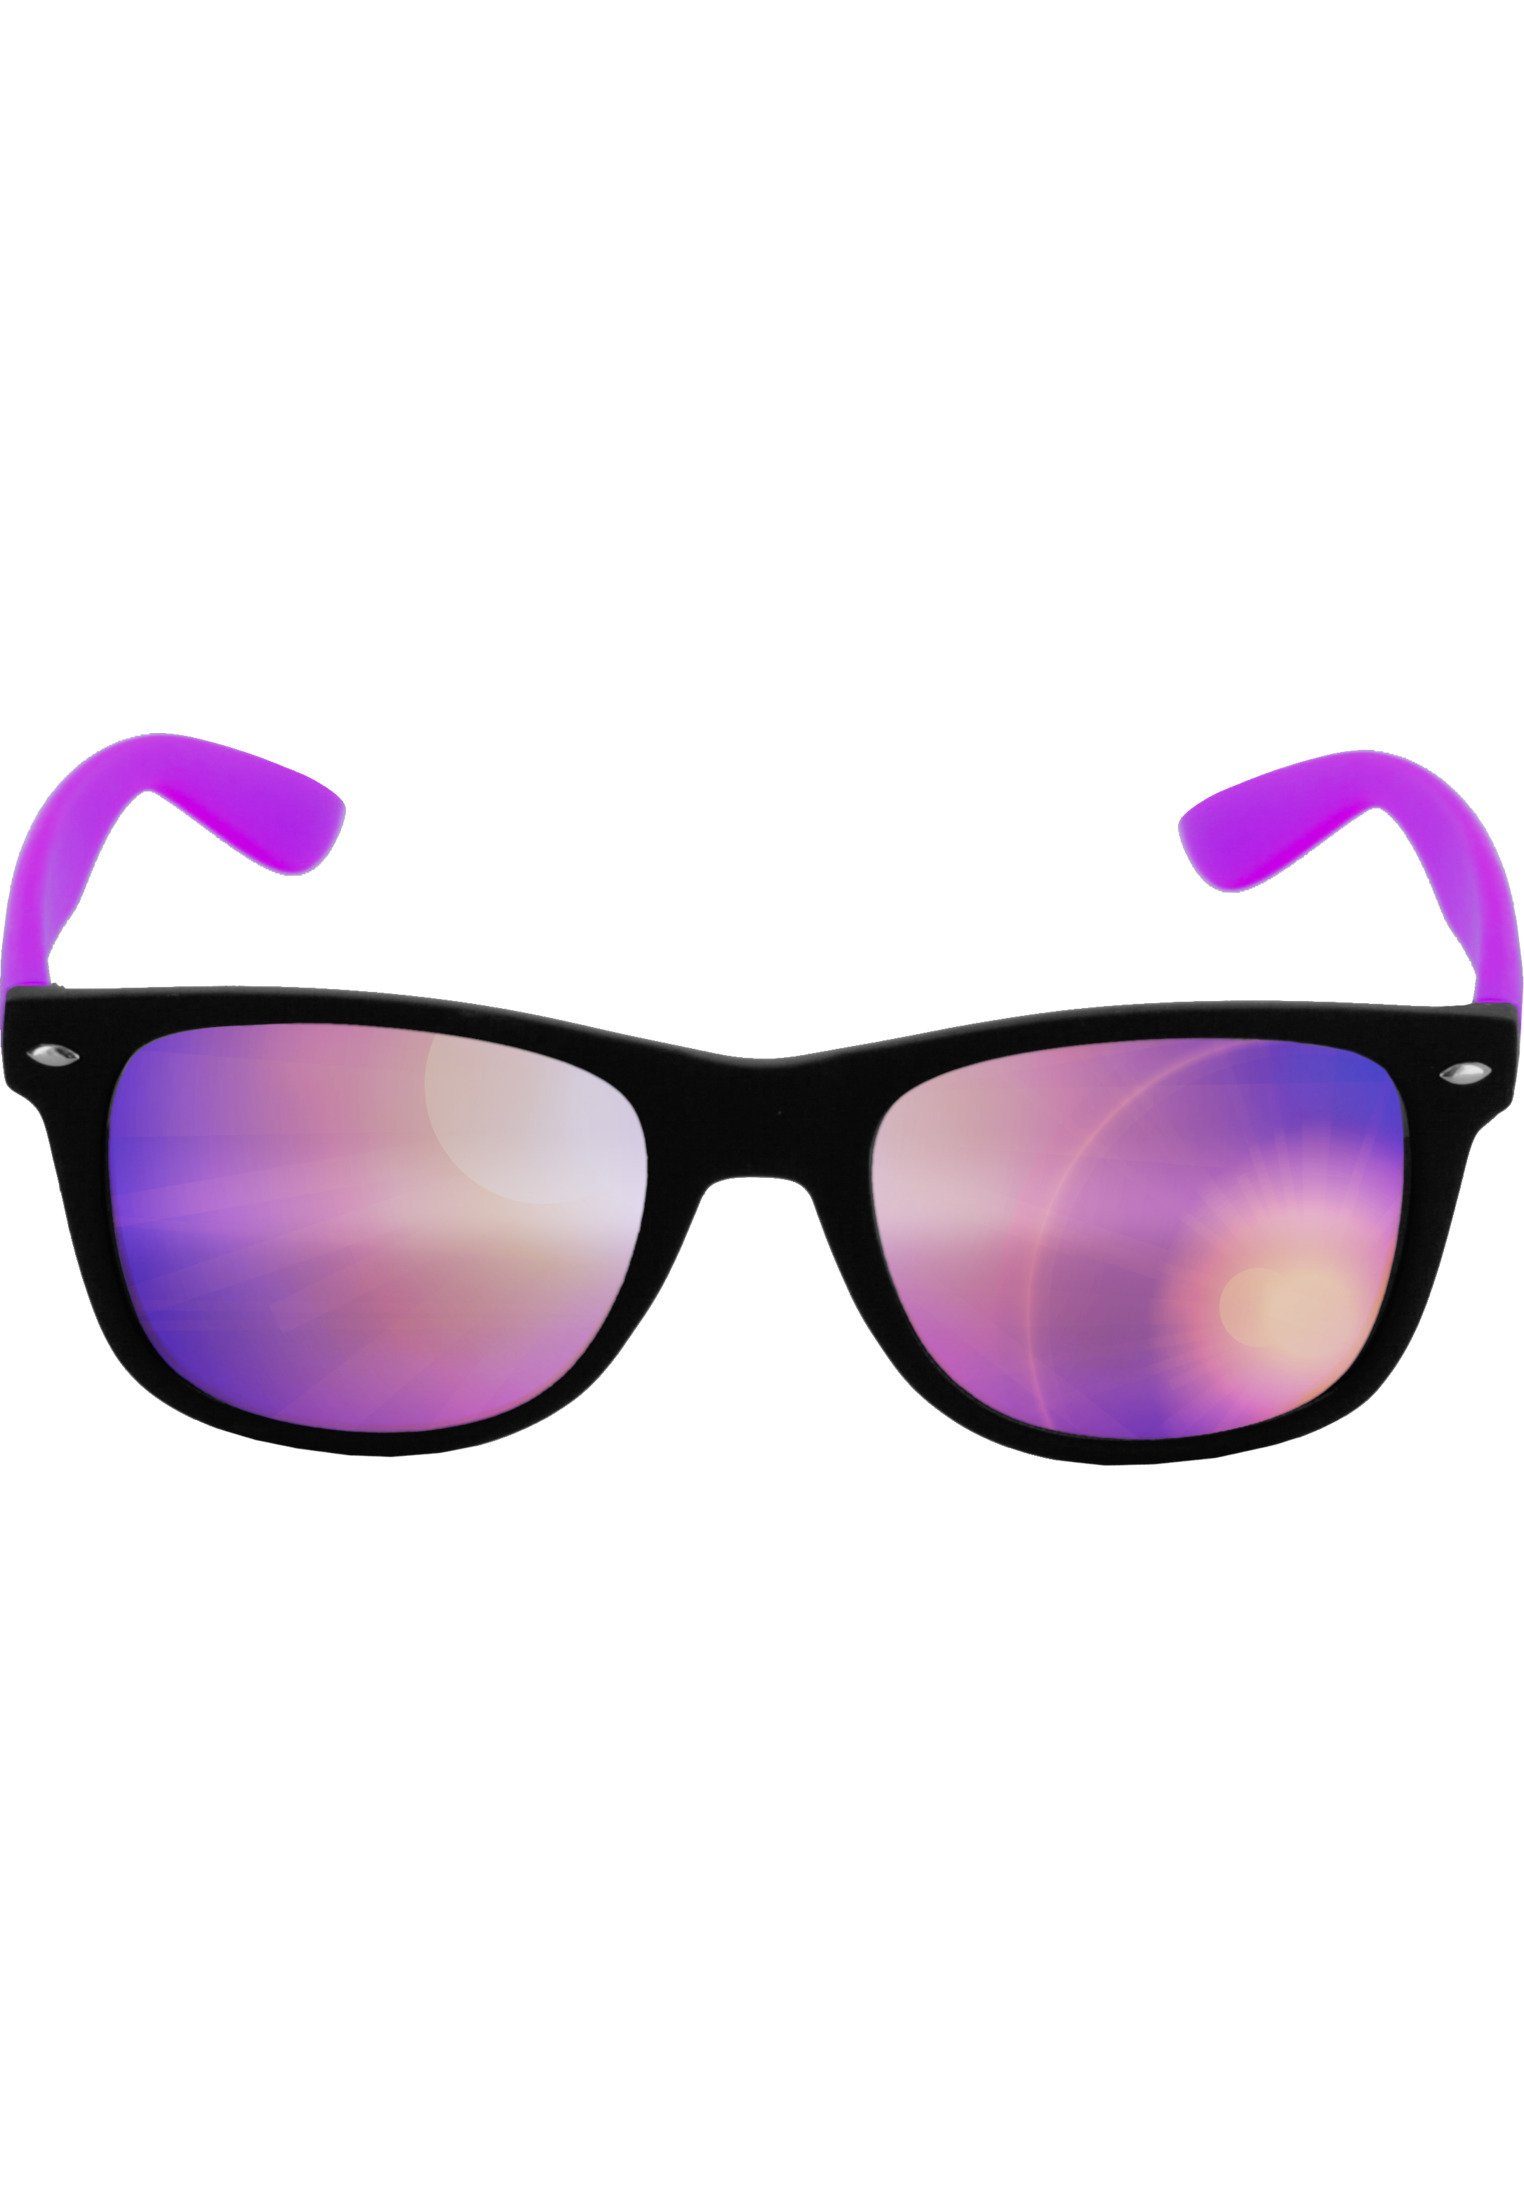 Sunglasses Mirror MSTRDS blk/pur/pur Likoma Sonnenbrille Accessoires